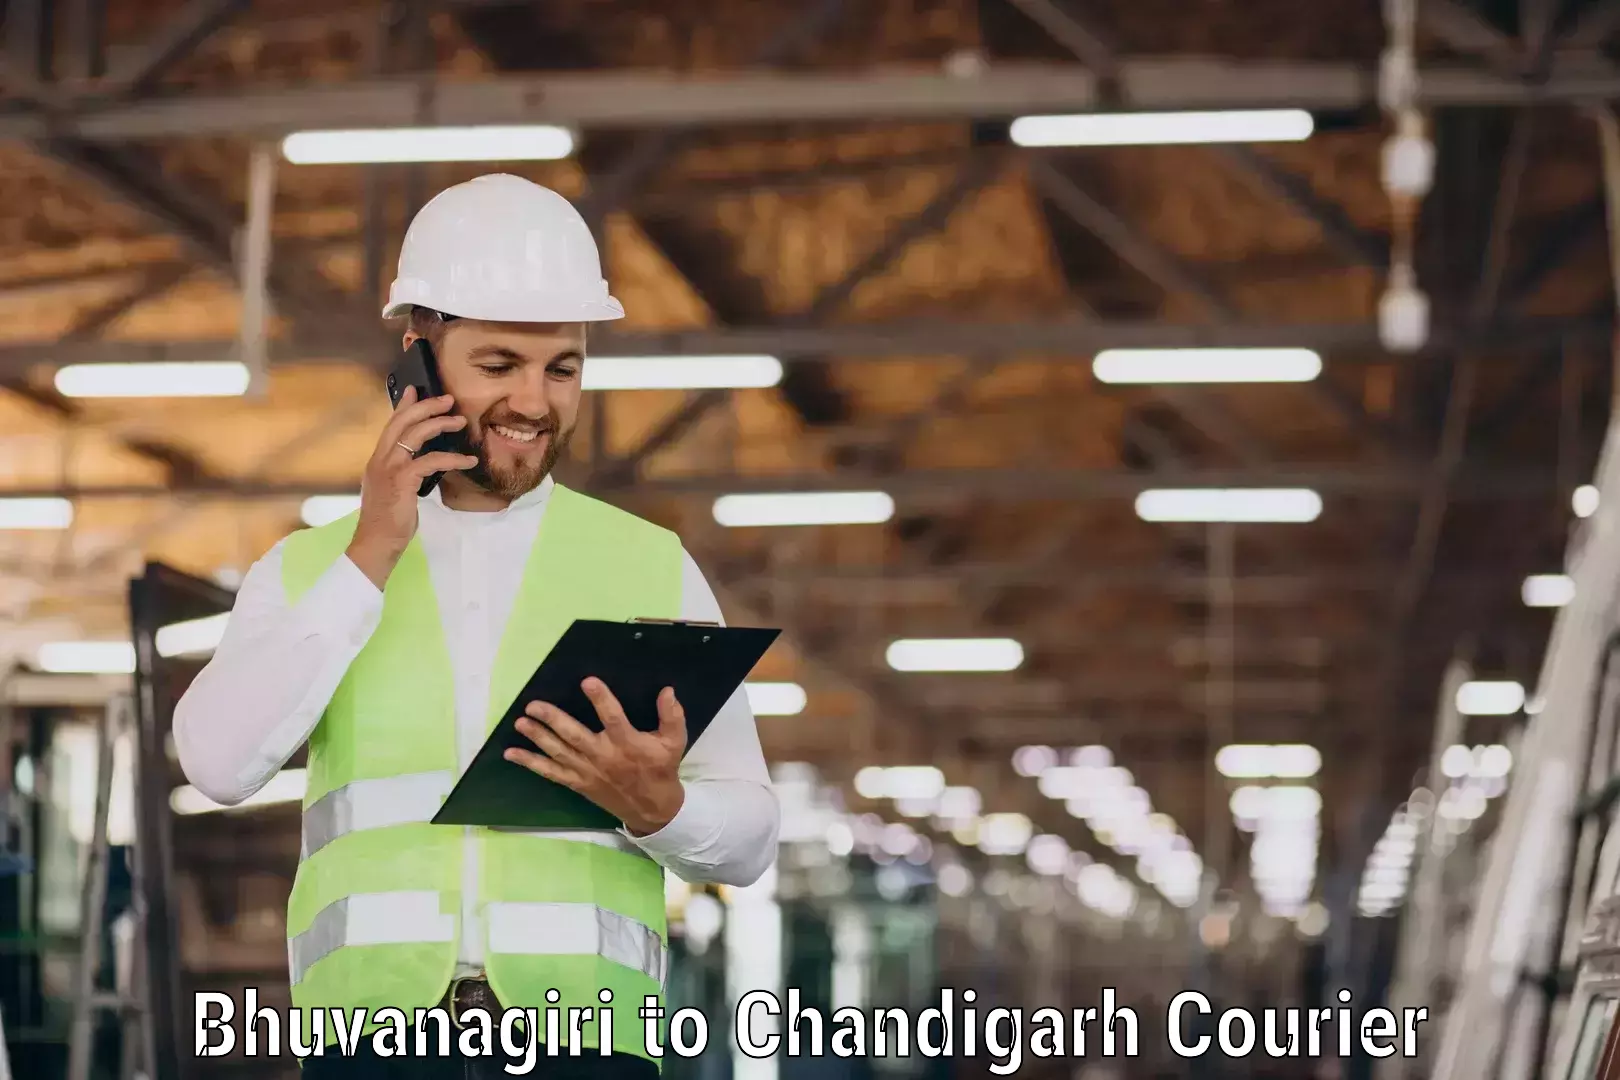 Express delivery solutions Bhuvanagiri to Chandigarh